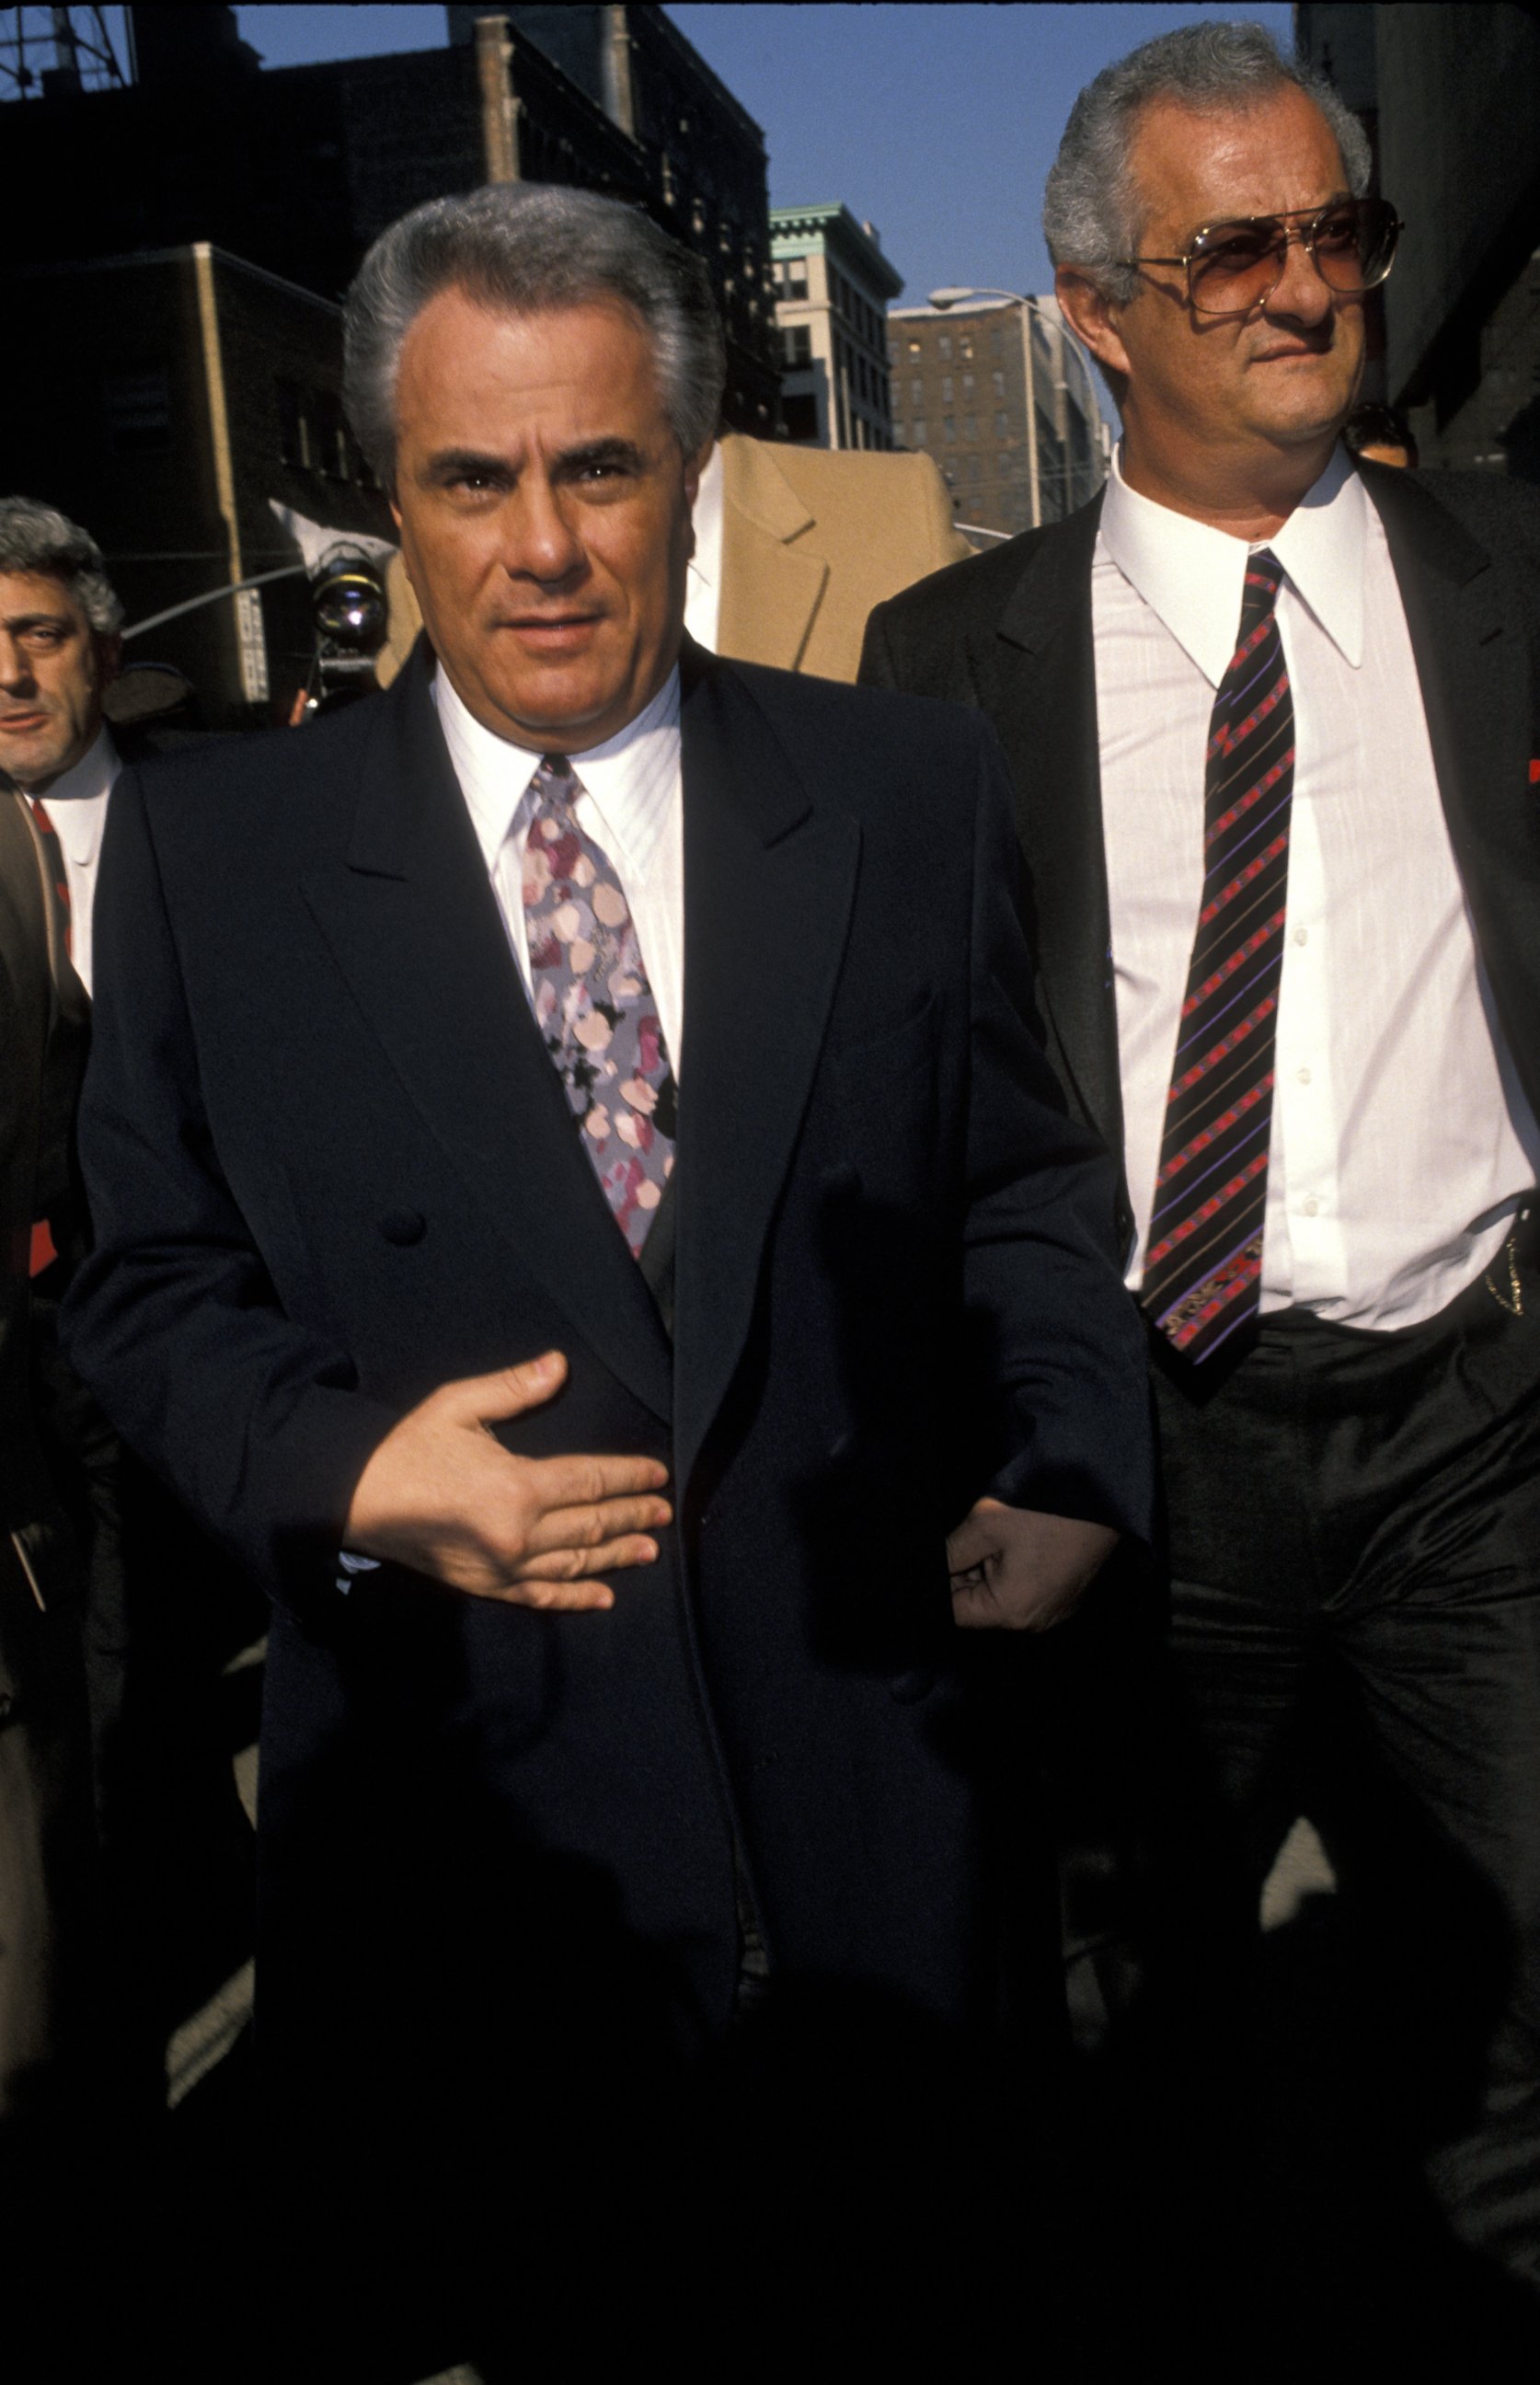 PHOTO: John Gotti appears for court in New York on Feb. 8, 1990.